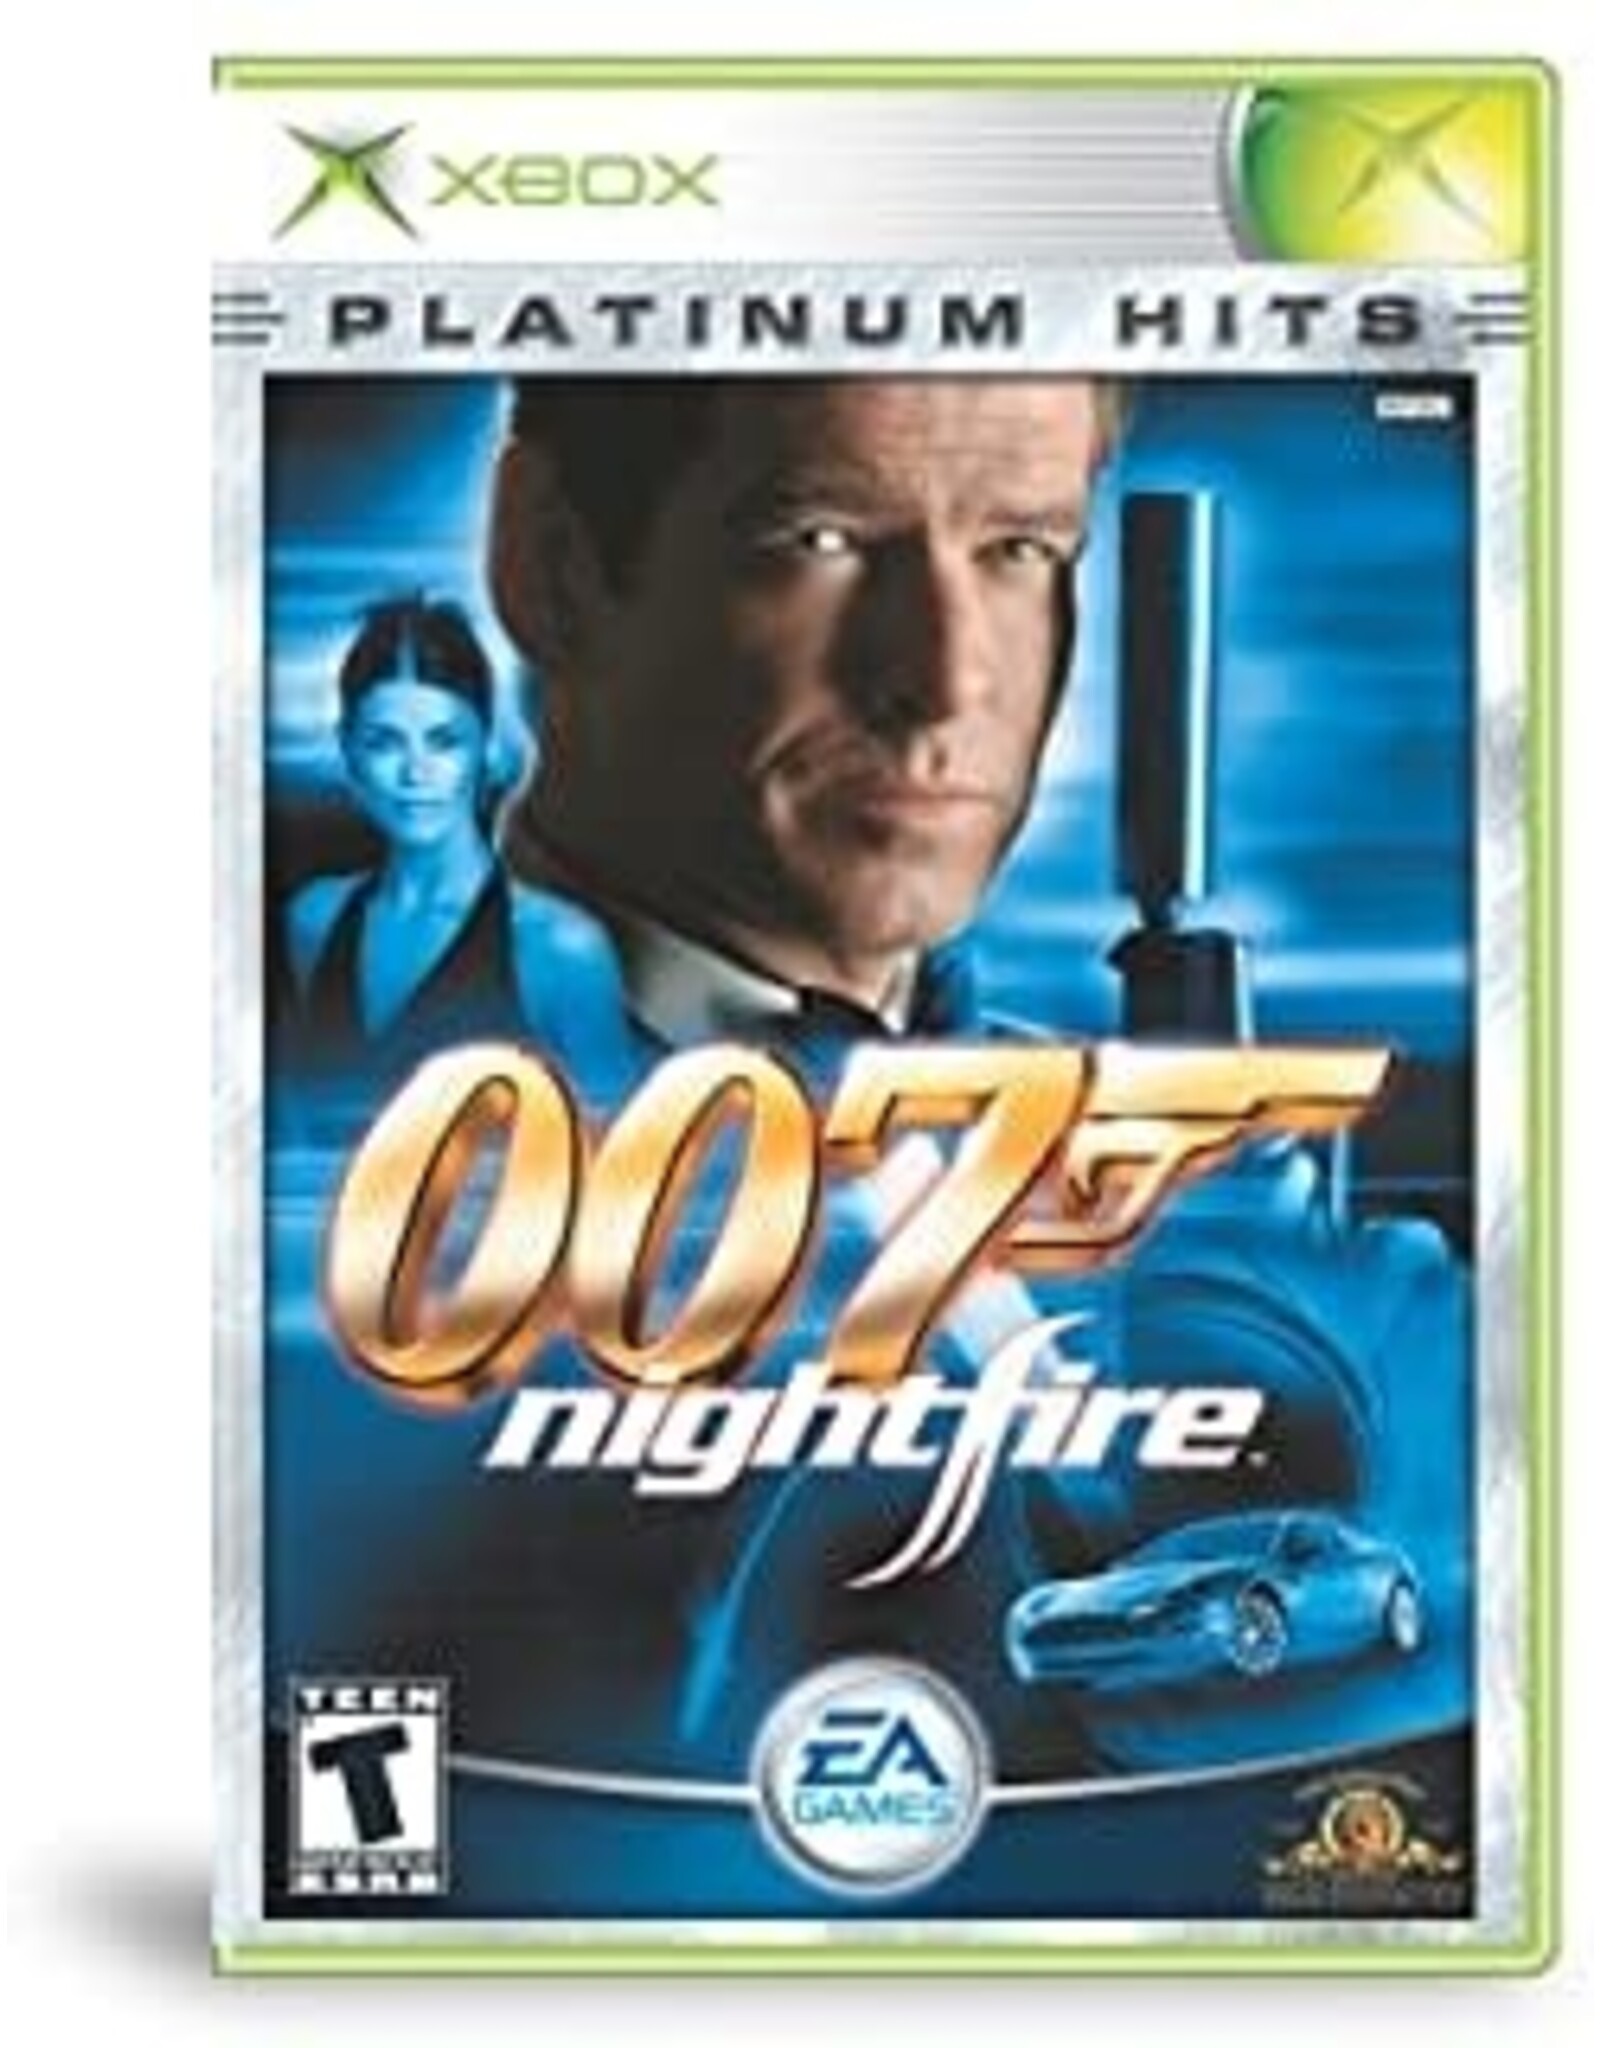 Xbox 007 Nightfire - Platinum Hits (Used)